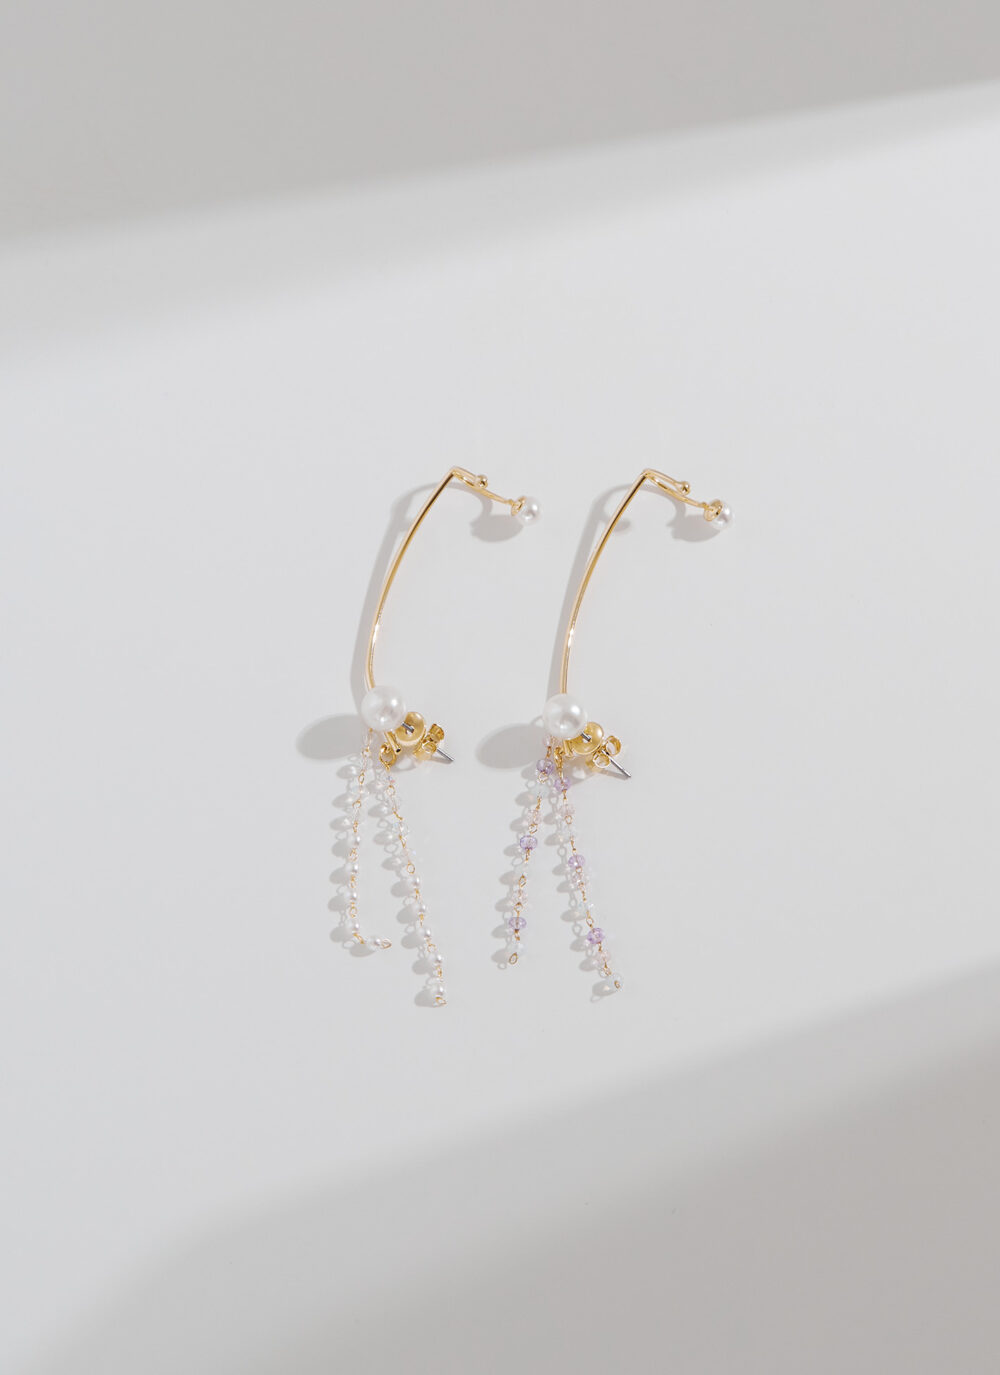 Eco安珂,韓國飾品,韓國耳環,耳針式耳環,耳骨夾耳針耳環,氣質耳環,單珍珠垂墜耳環